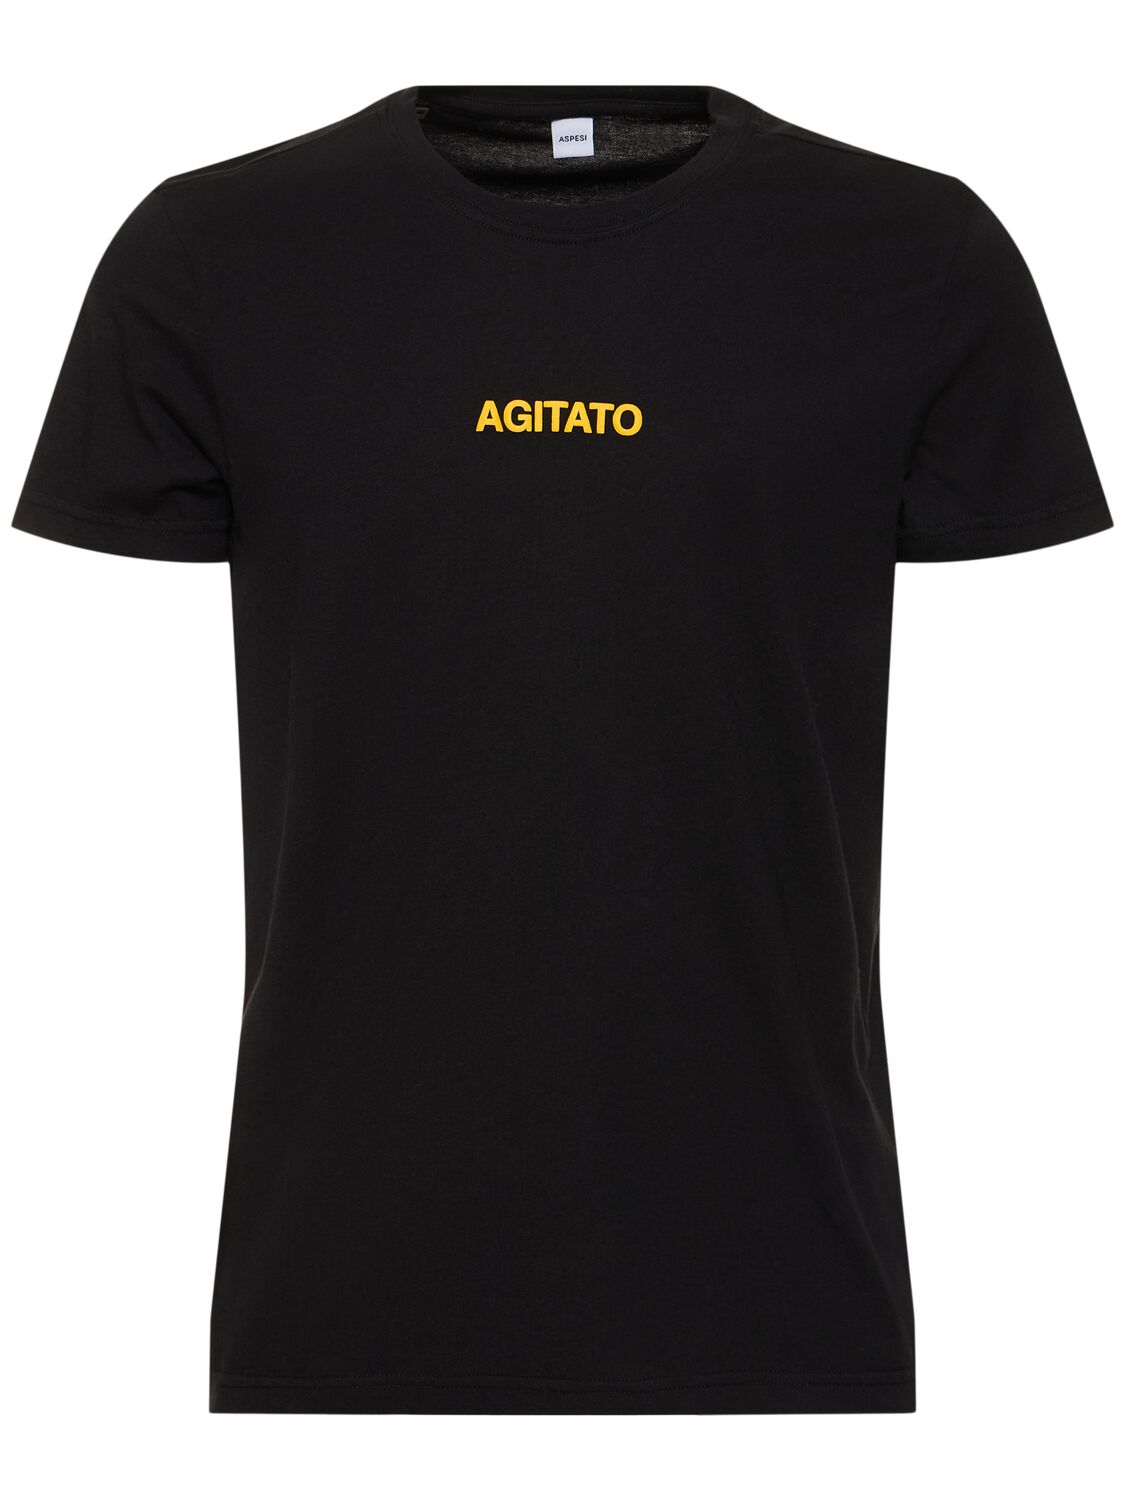 Aspesi Agitato Print Cotton Jersey T-shirt In Black